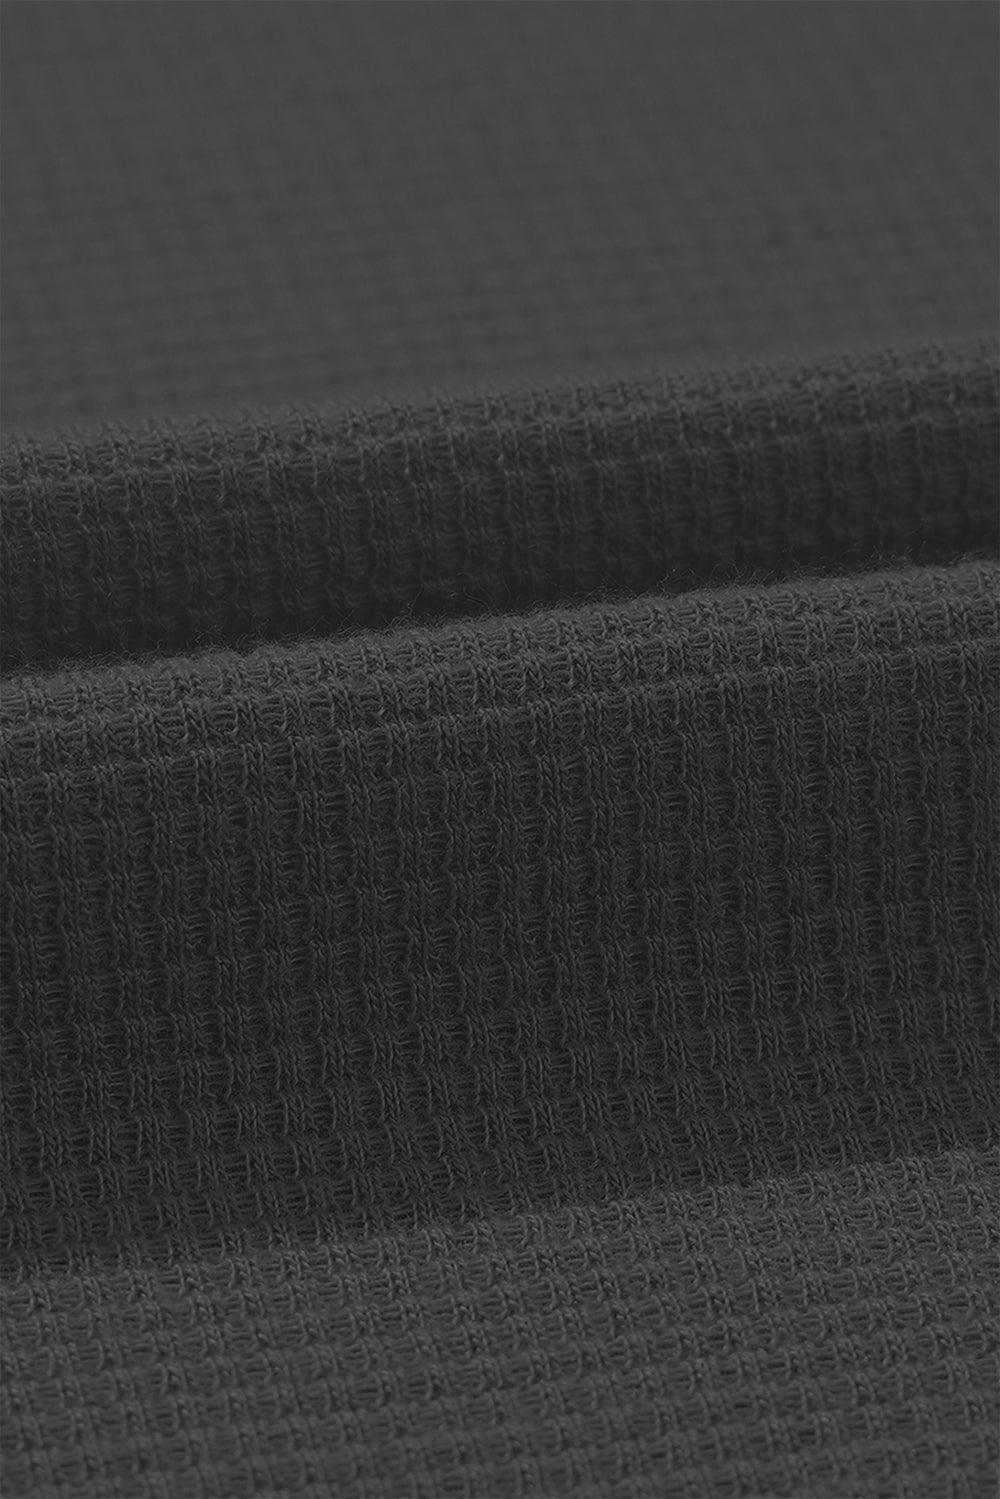 a close up of a dark gray fabric